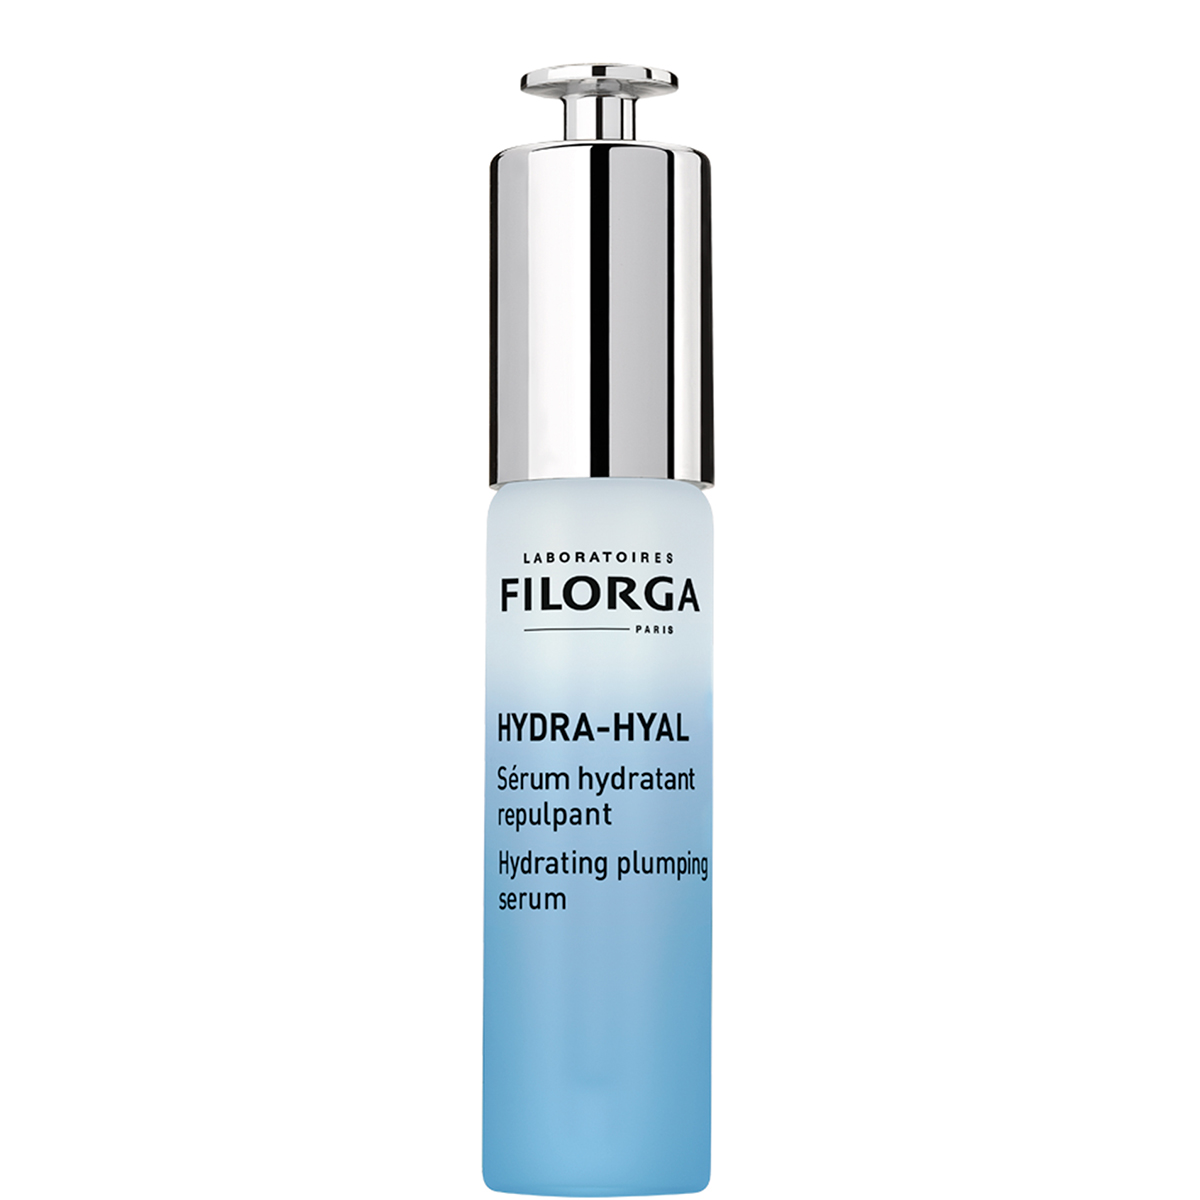 Filorga Hydra-Hyal Hydrating Plumping Serum